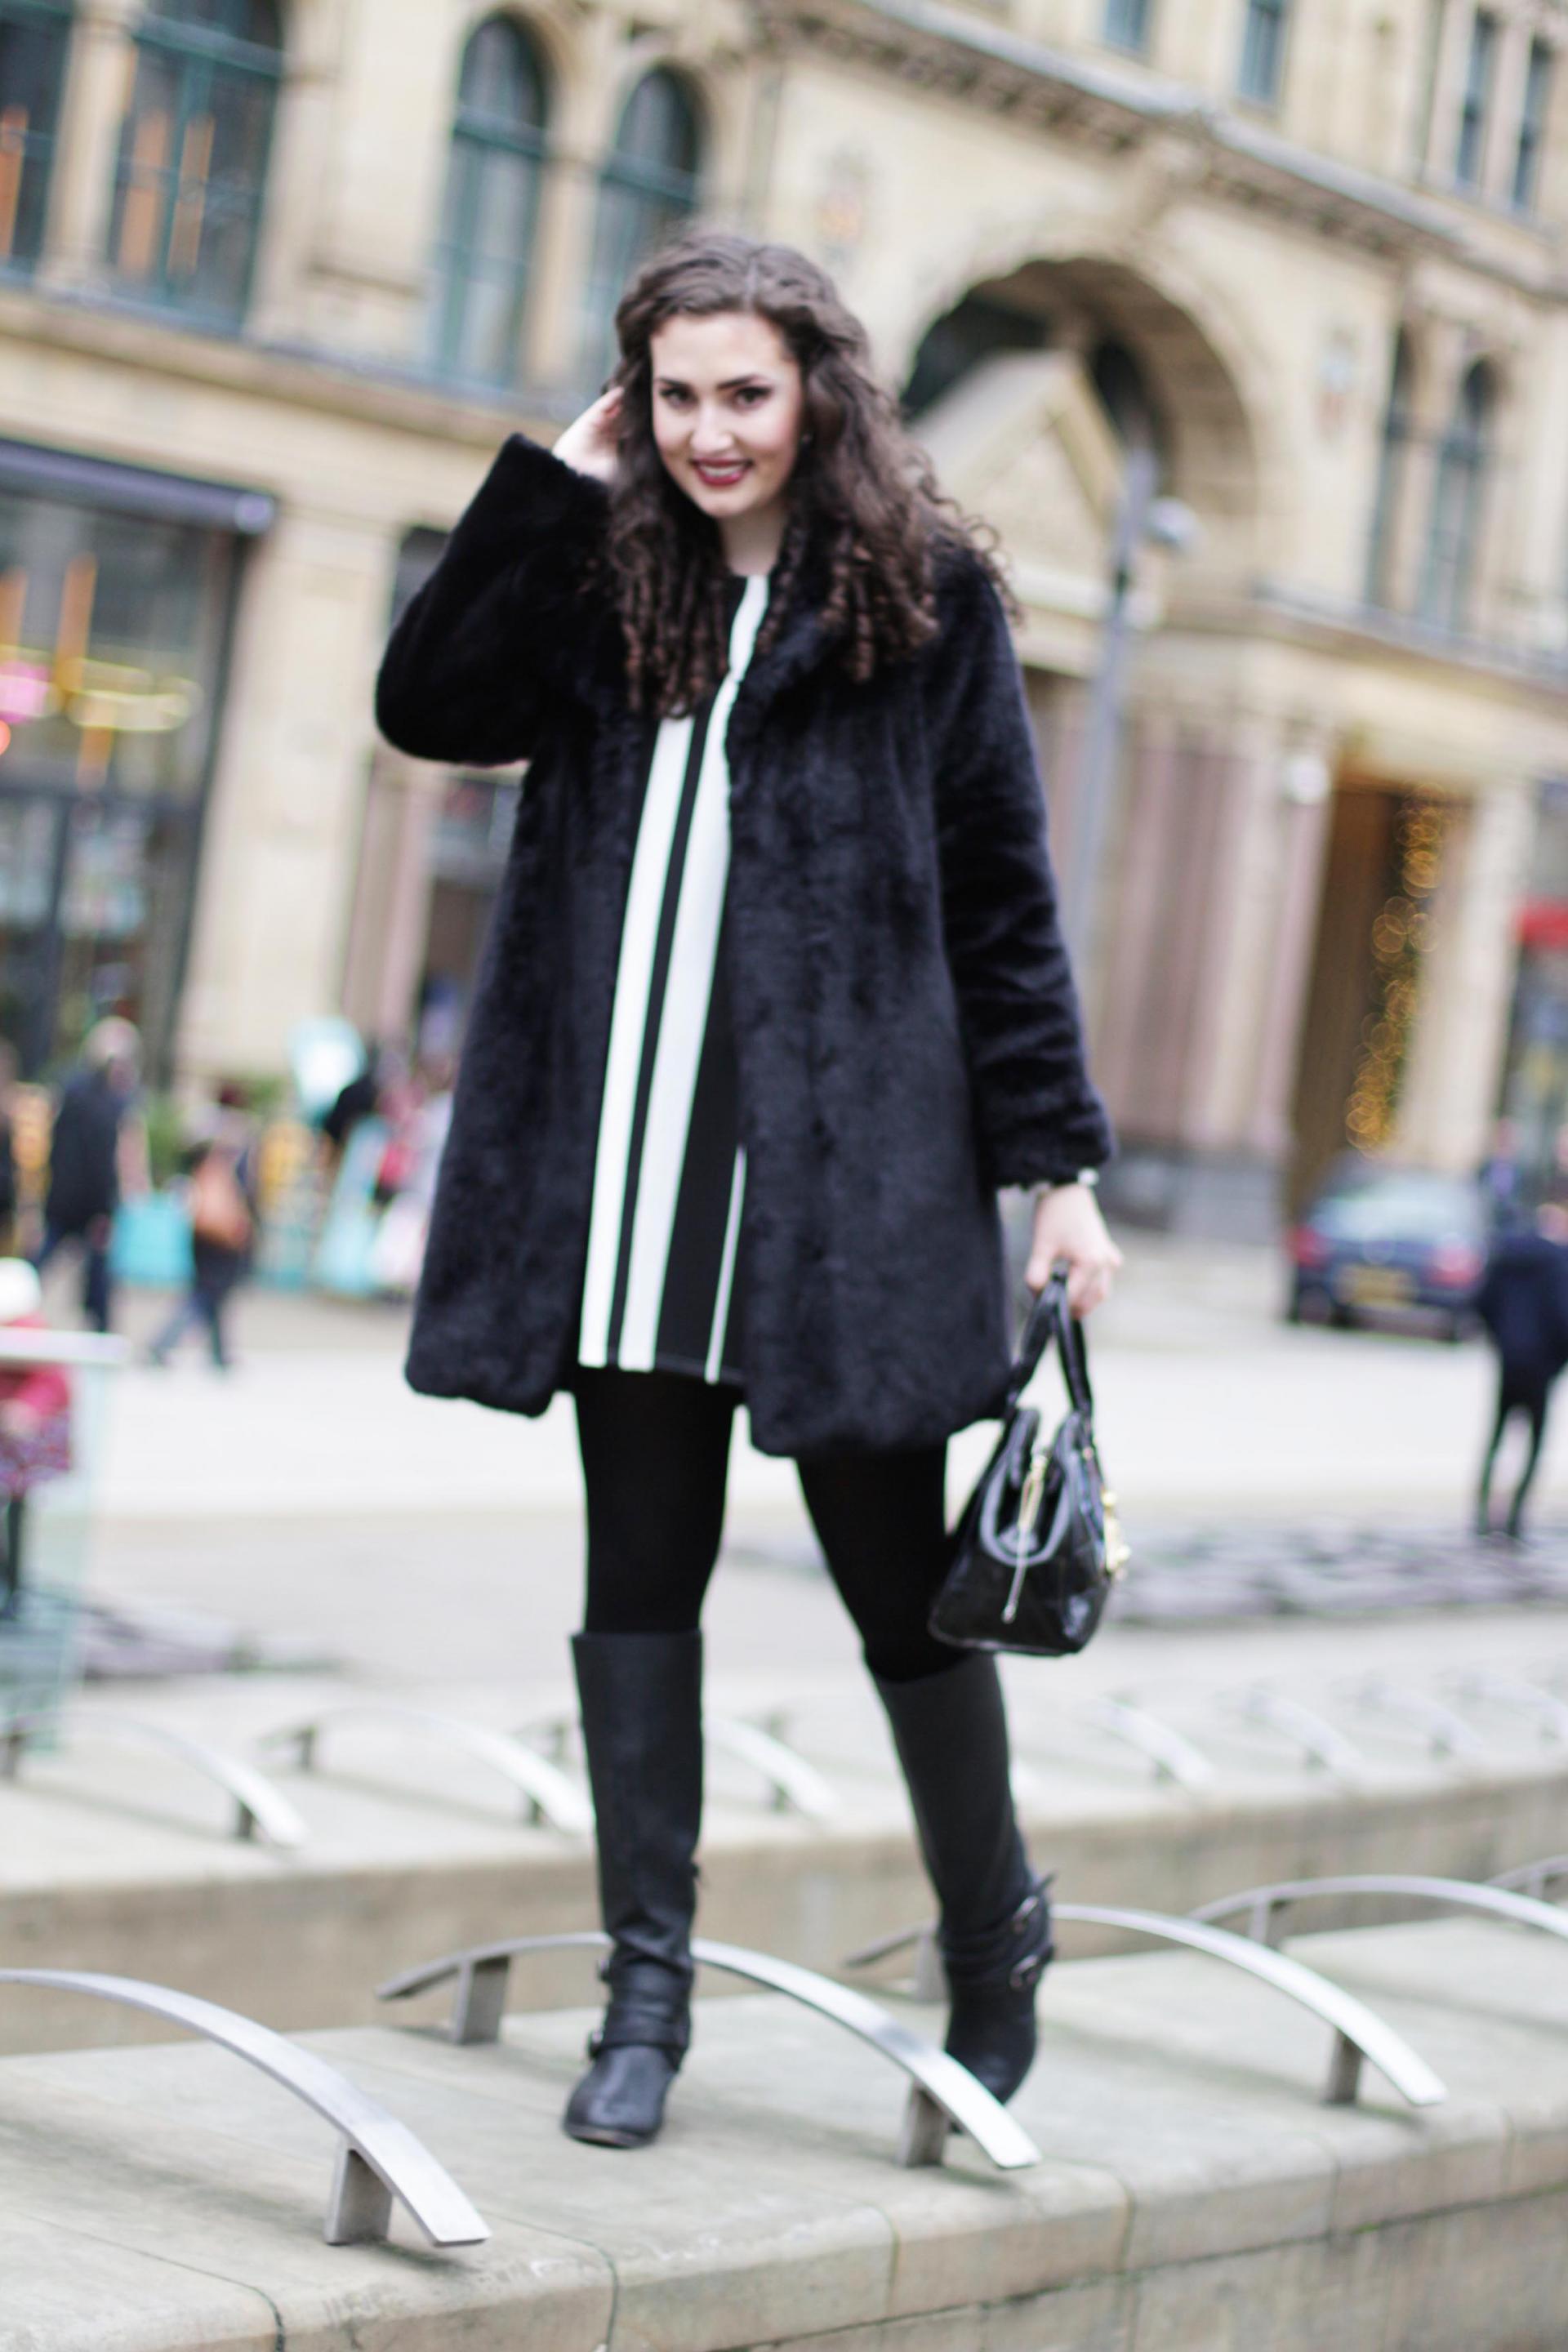 monochrome swing dress and black faux fur coat